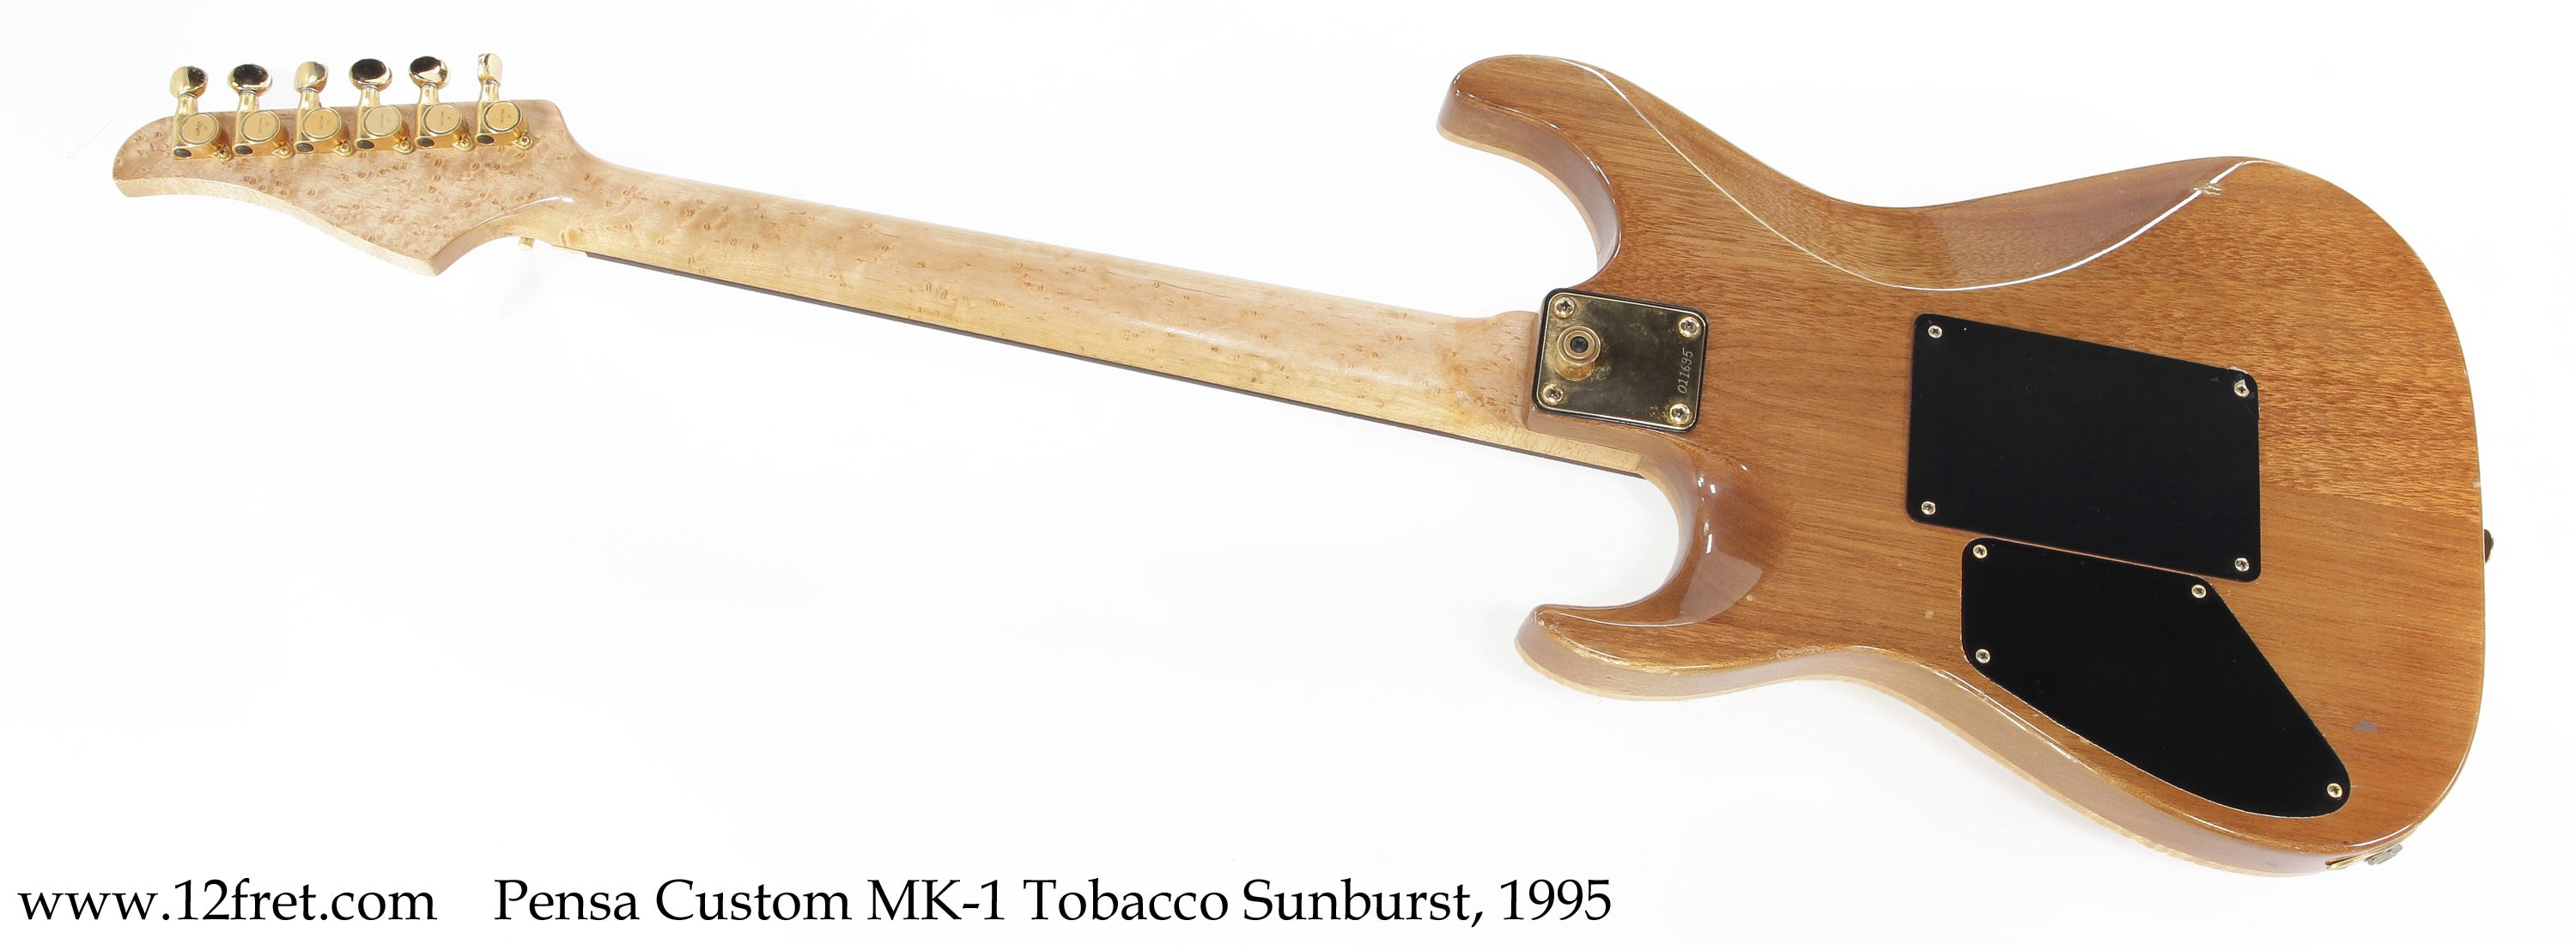 Pensa Custom MK-1 Tobacco Sunburst, 1995 - The Twelfth Fret